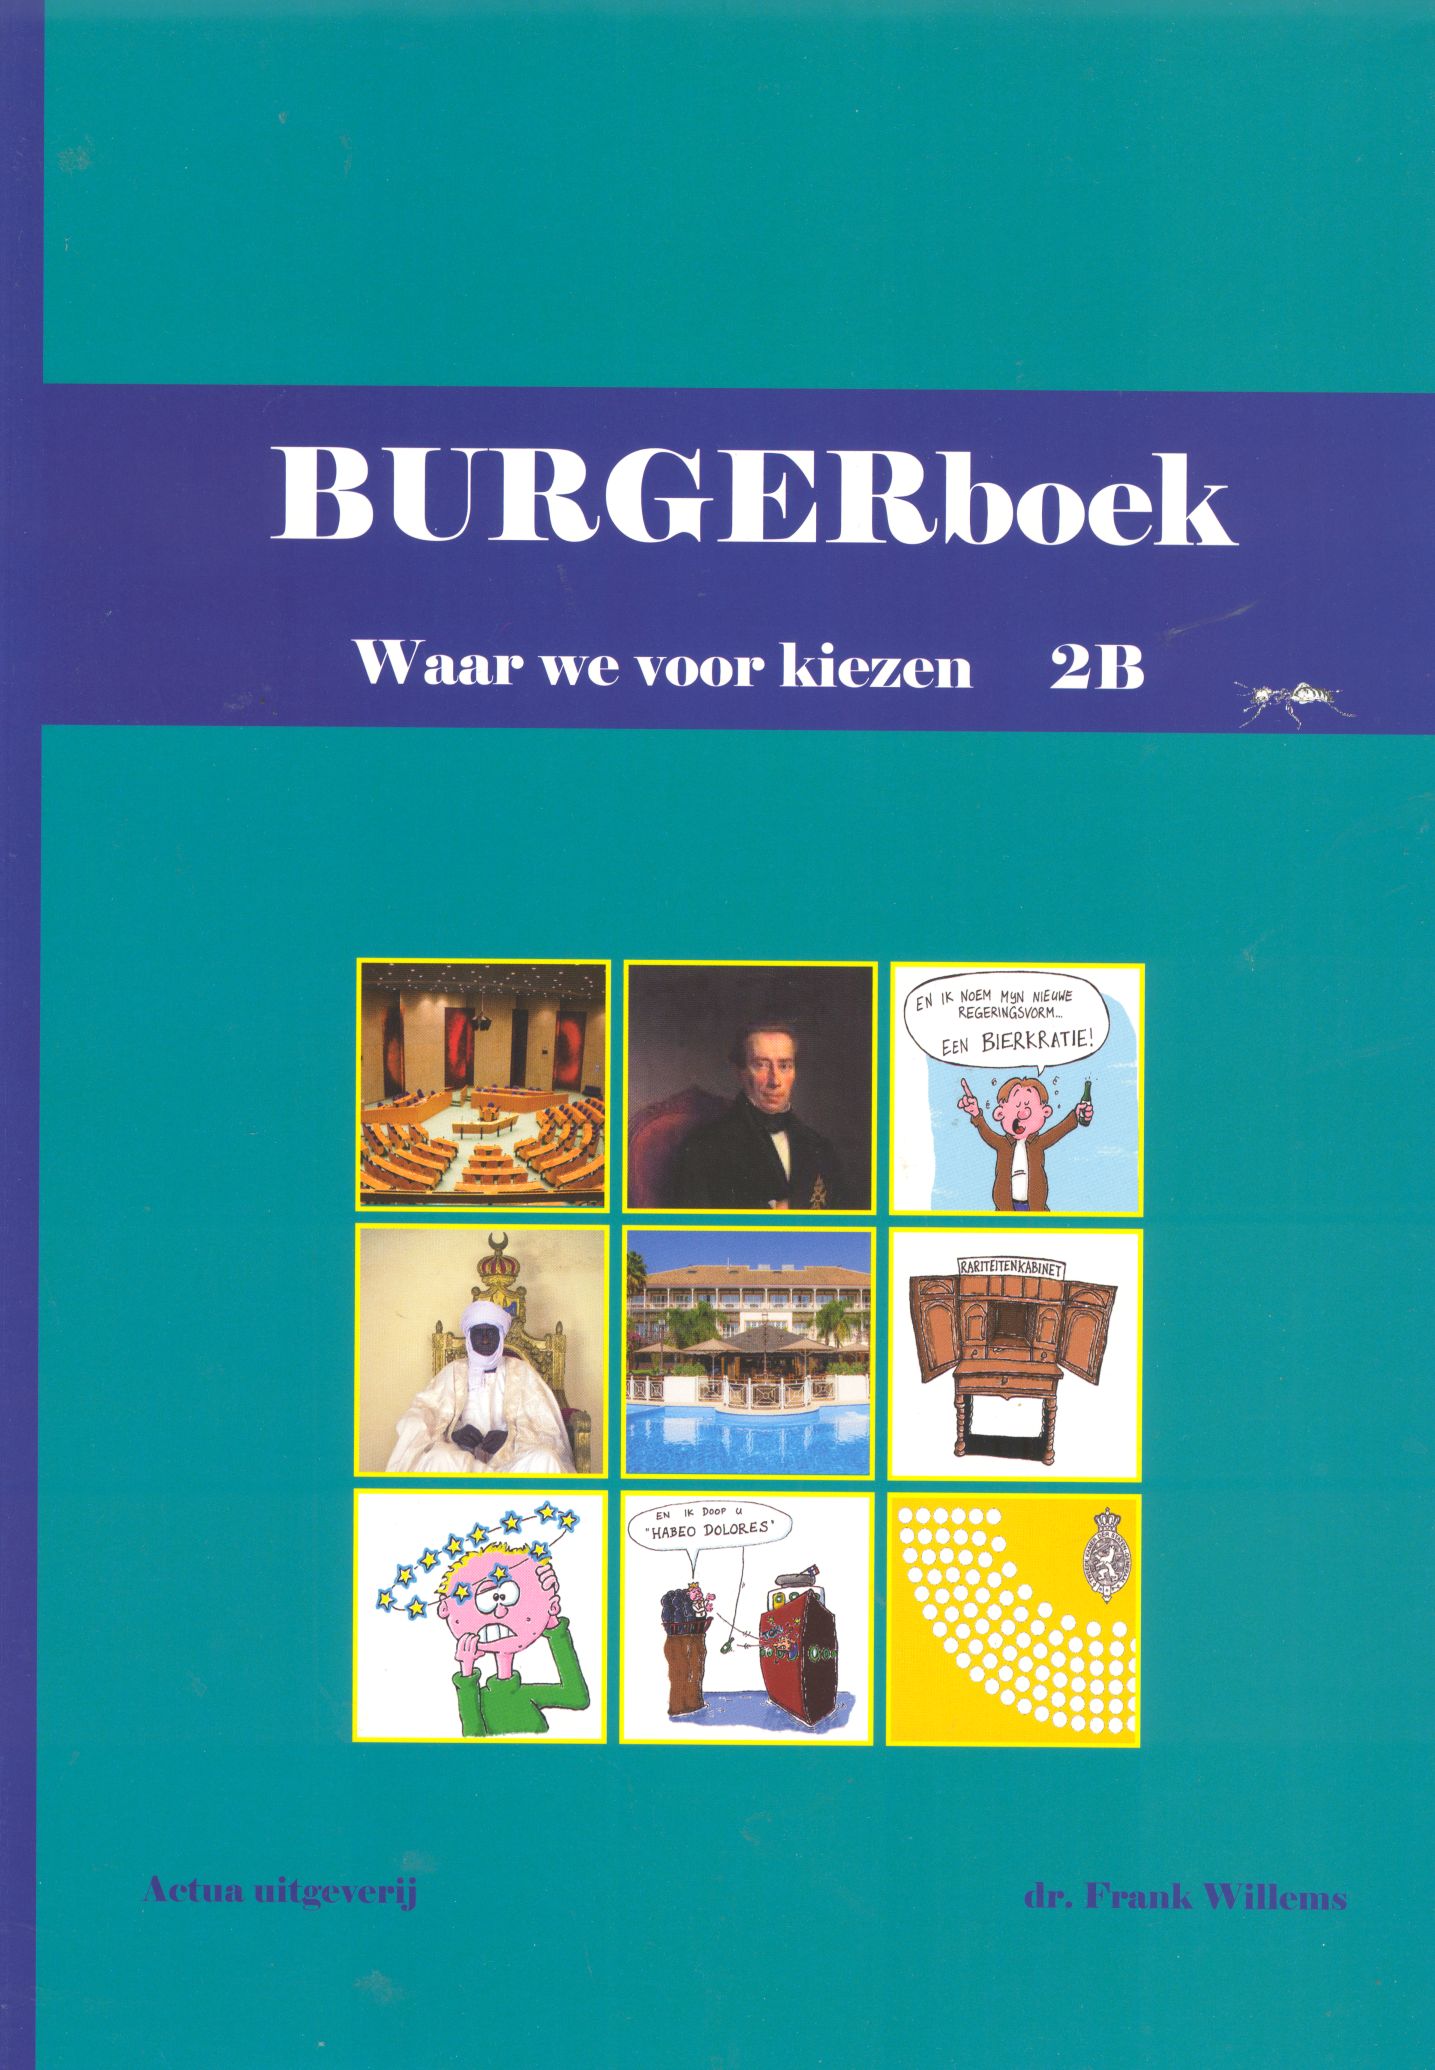 BURGERboek - Kiezen 2B
havo/vwo/mbo/hbo